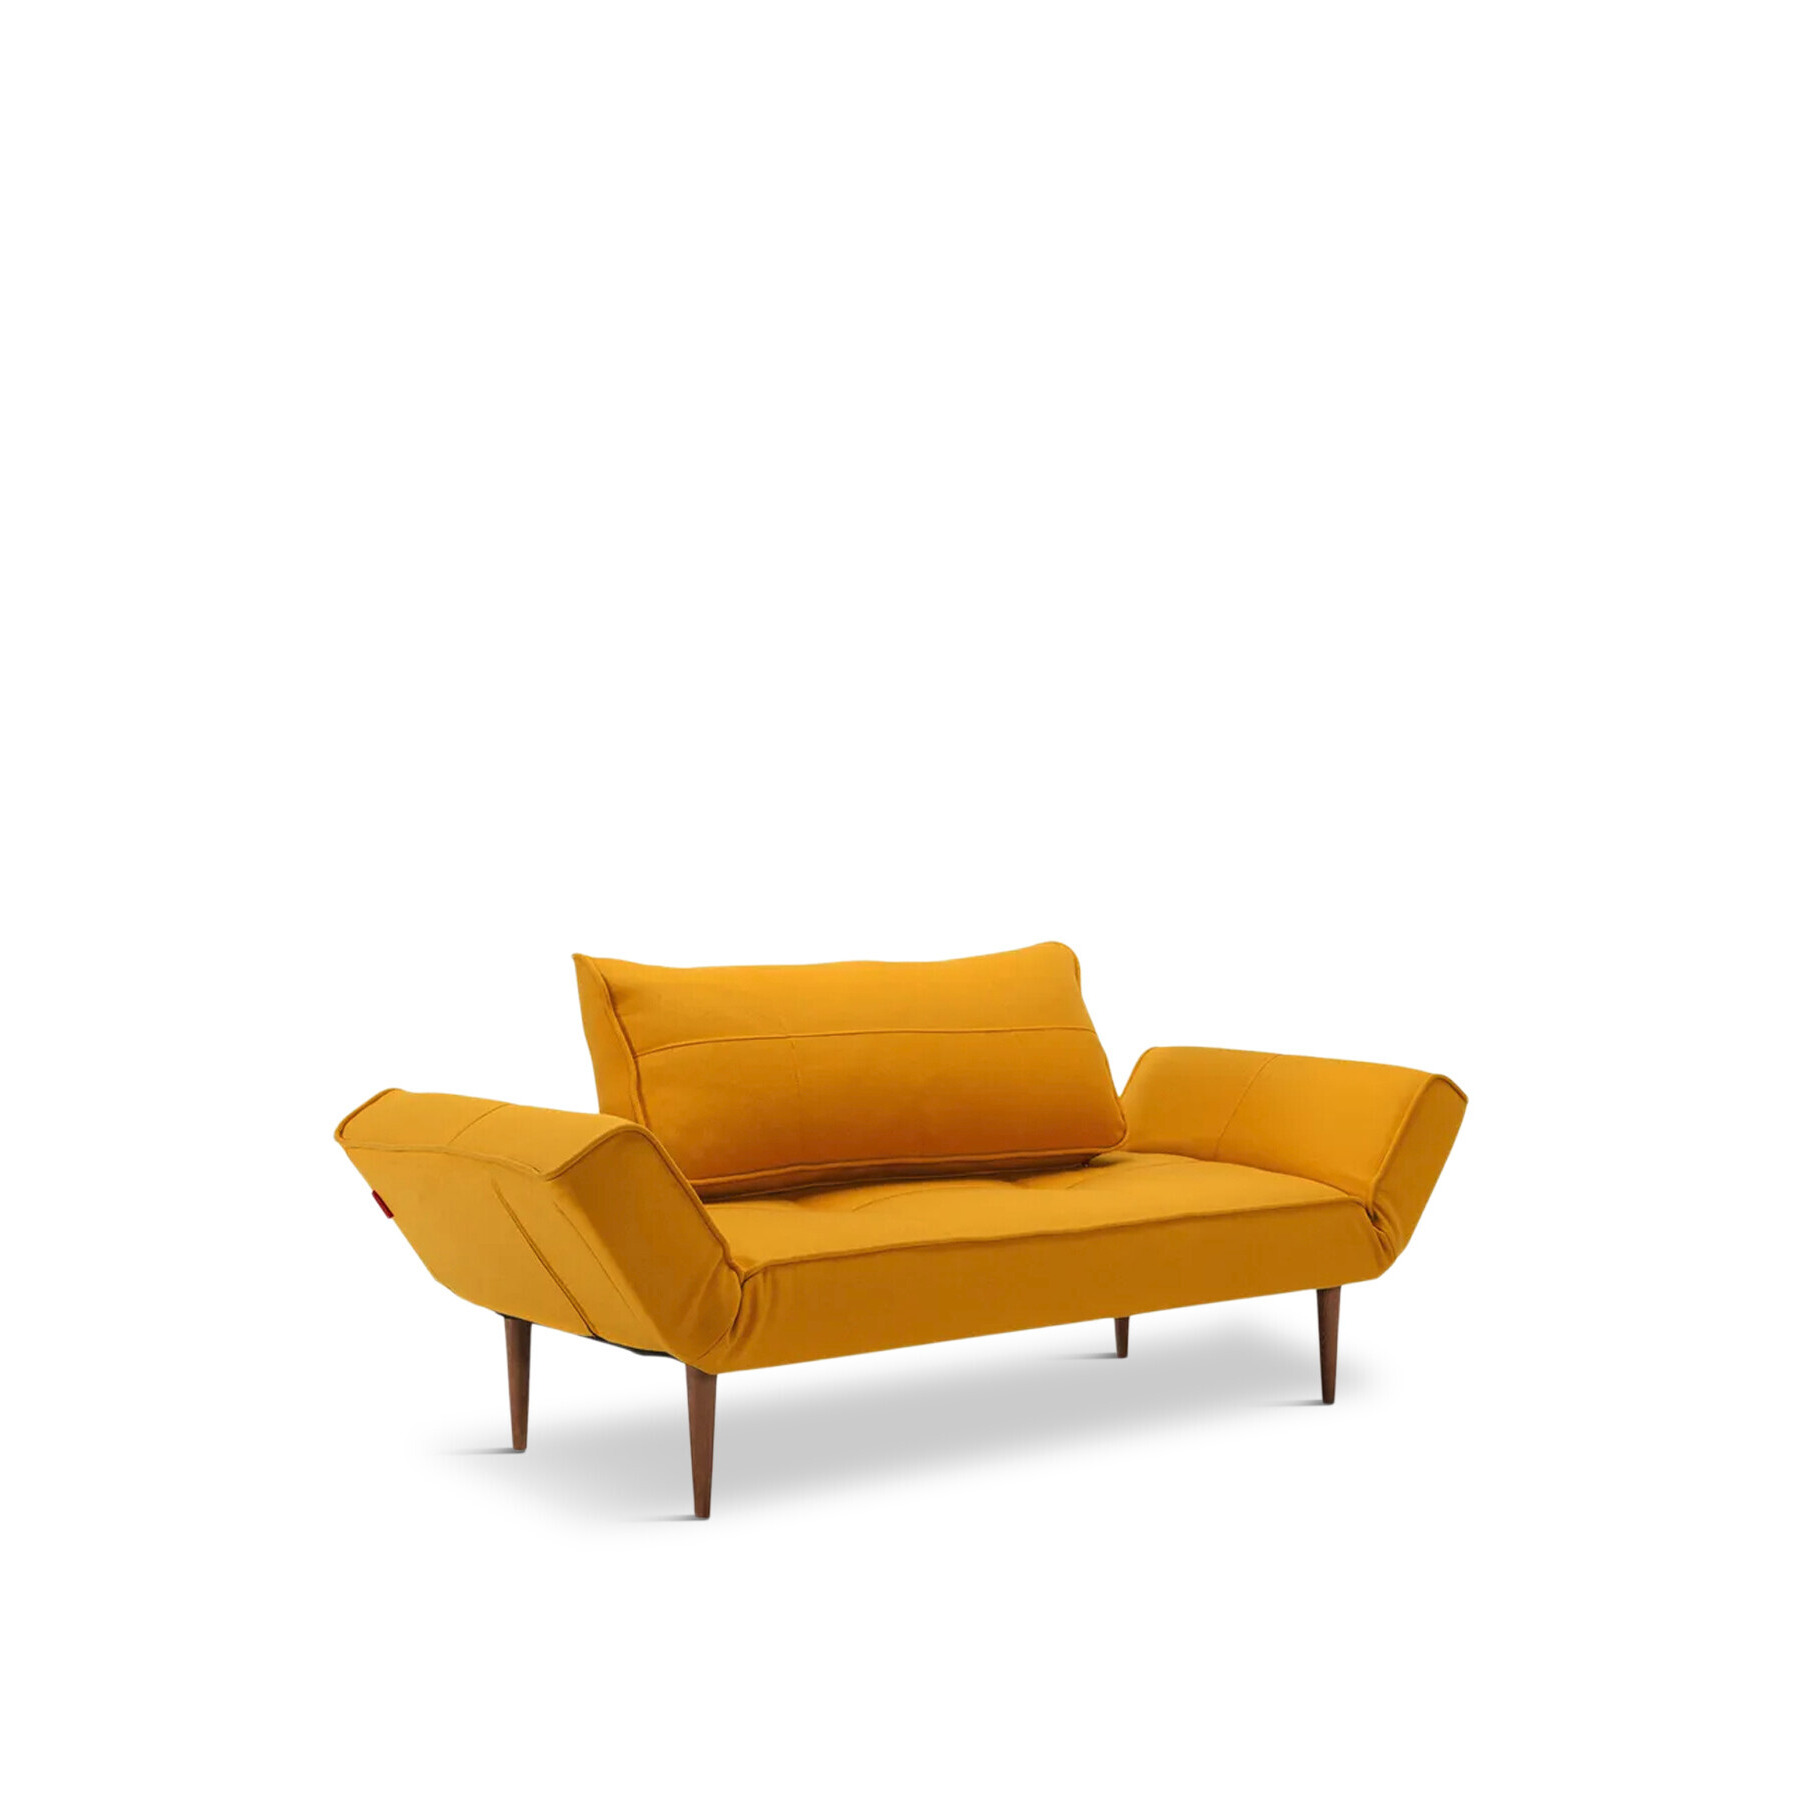 Heal's Tilt Sofa Bed Dessin Mustard - Size 178x45x81 Yellow - image 1